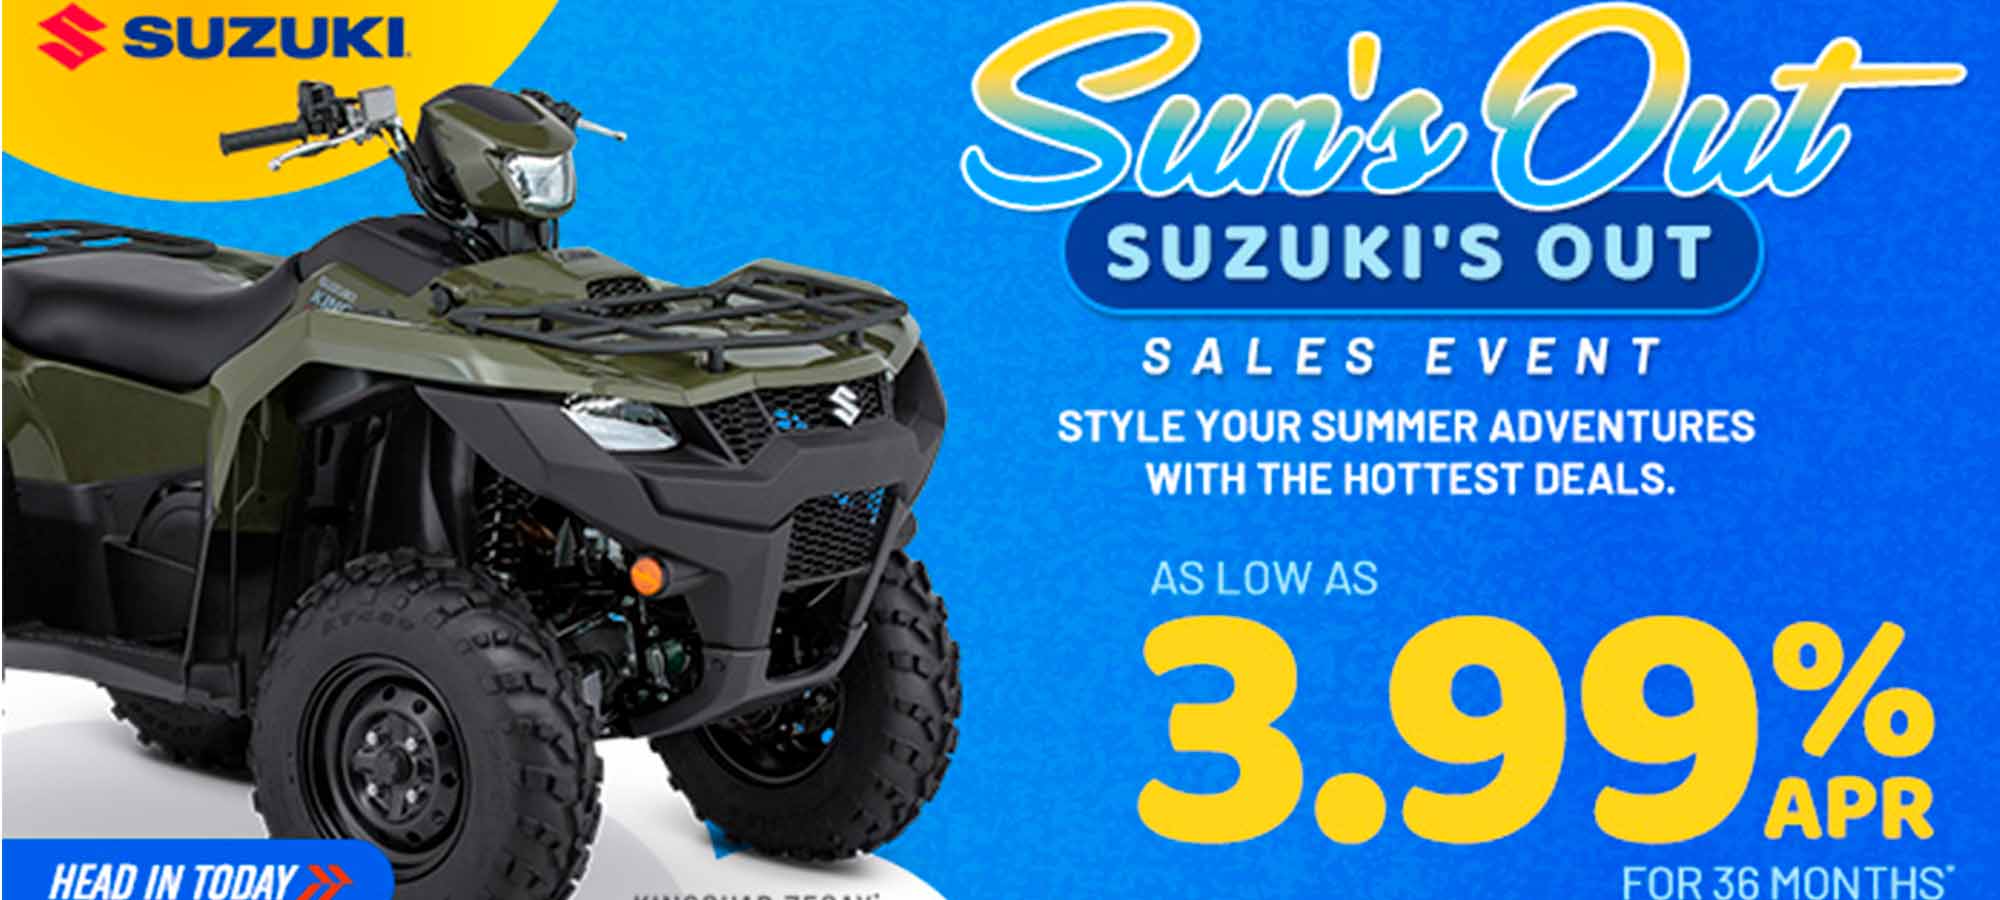 Suzuki US - Sun's Out Suzuki's Out Sales Event at Southern Illinois Motorsports